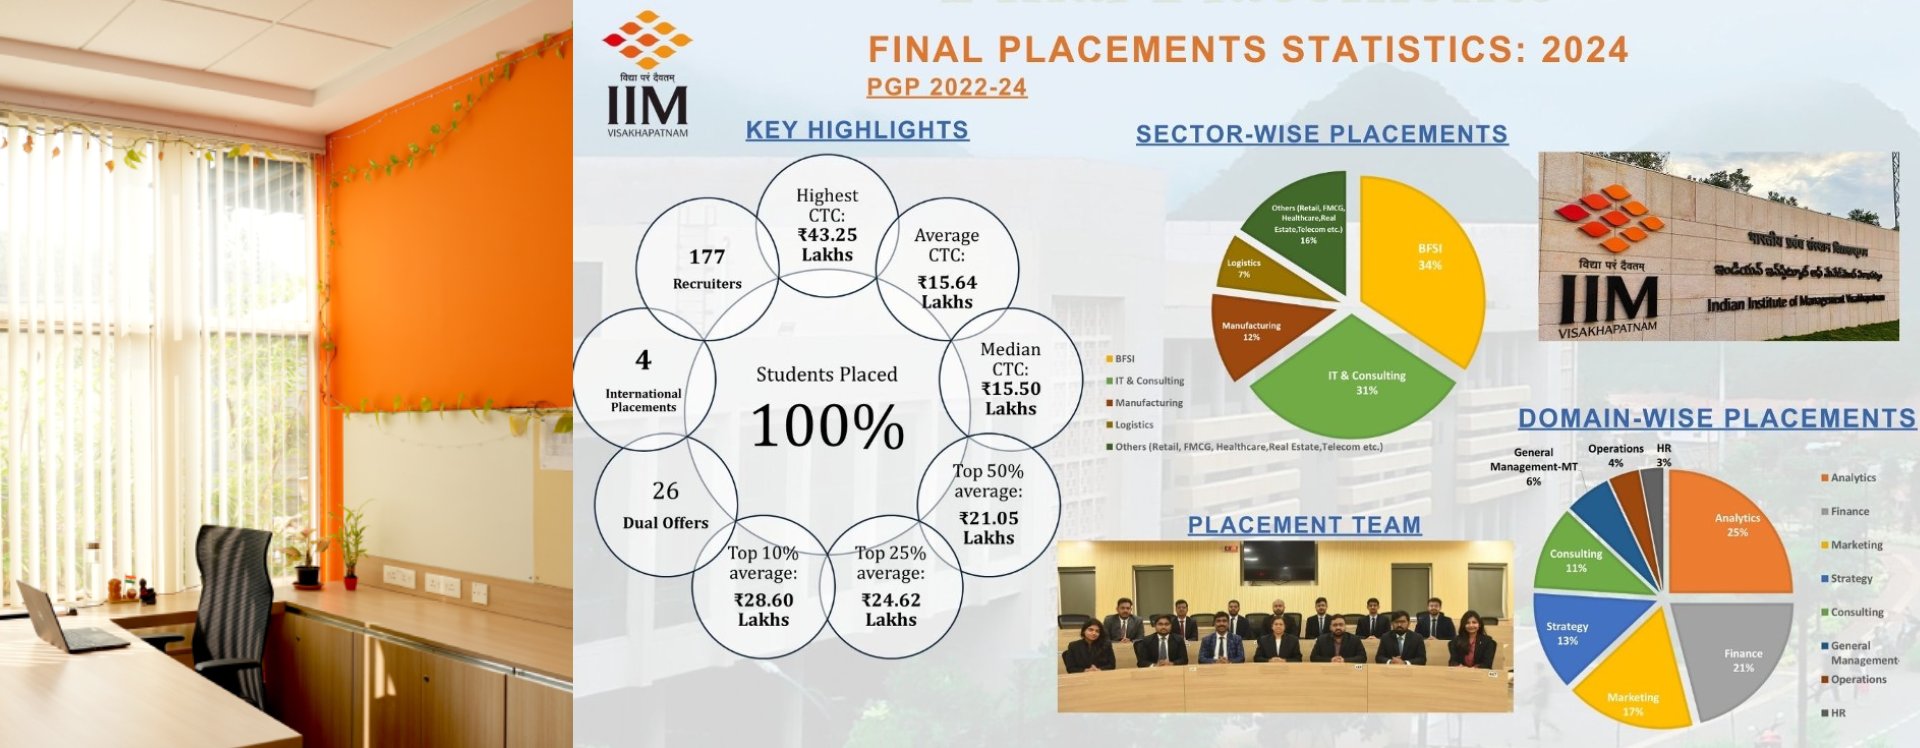 Final Placement Statistics 2022-24